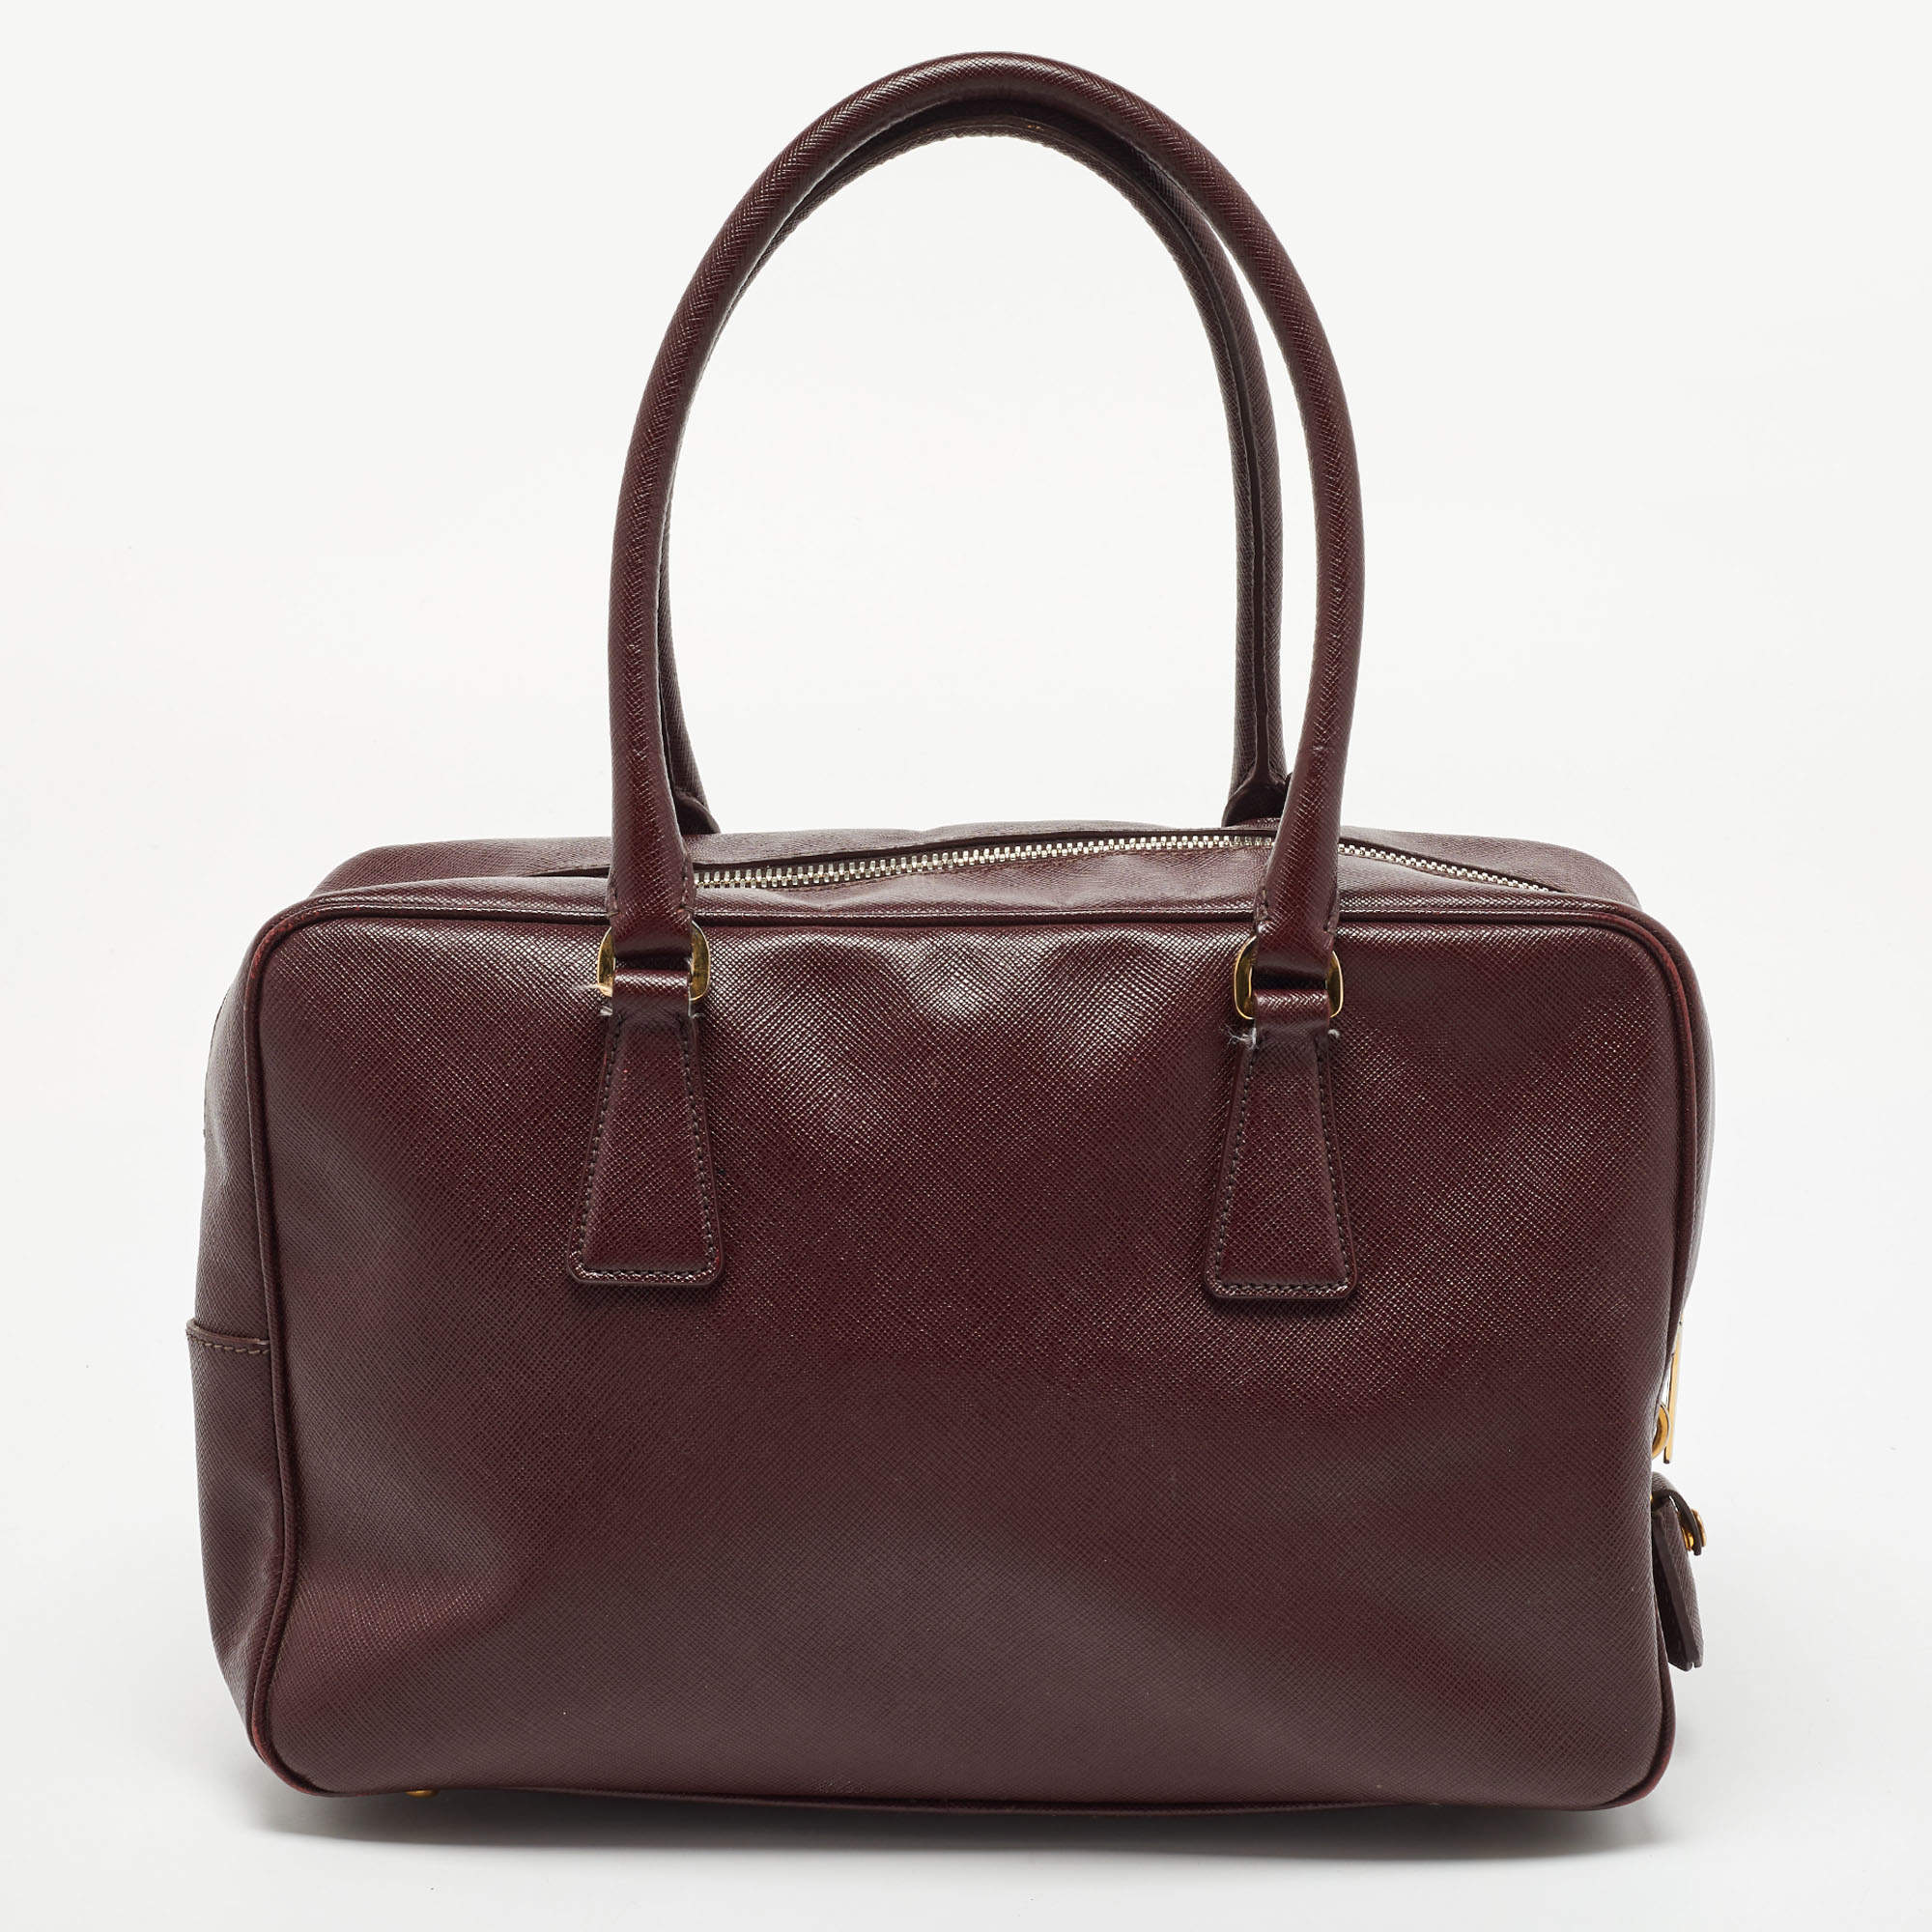 Prada Turchese Saffiano Metal Leather Clutch Bag